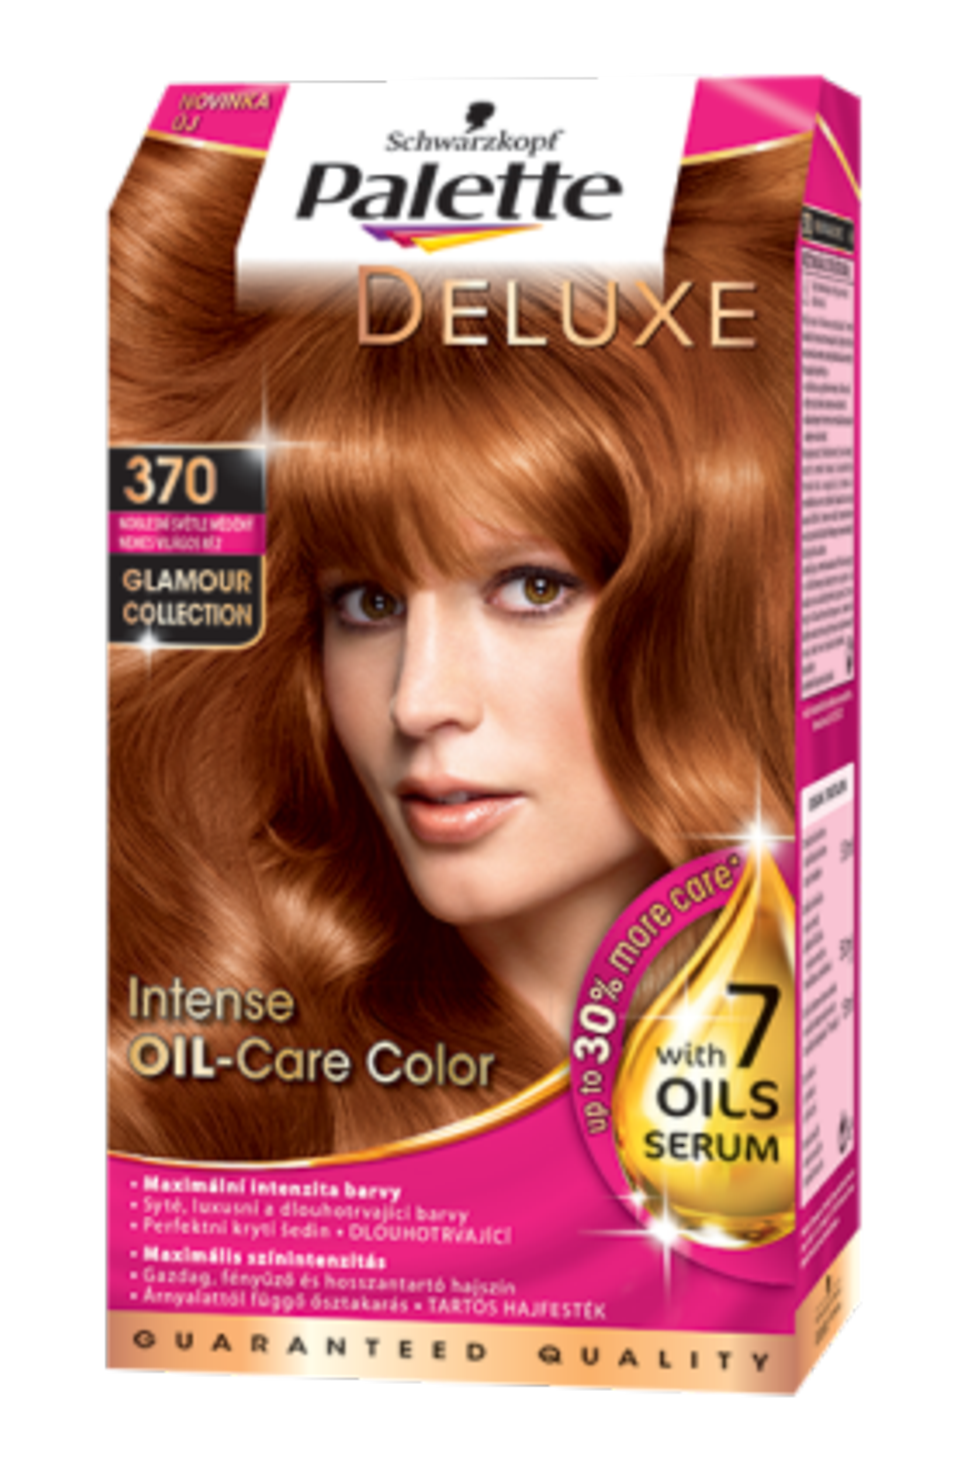 Palette Deluxe Intense OIL-Care Color 370